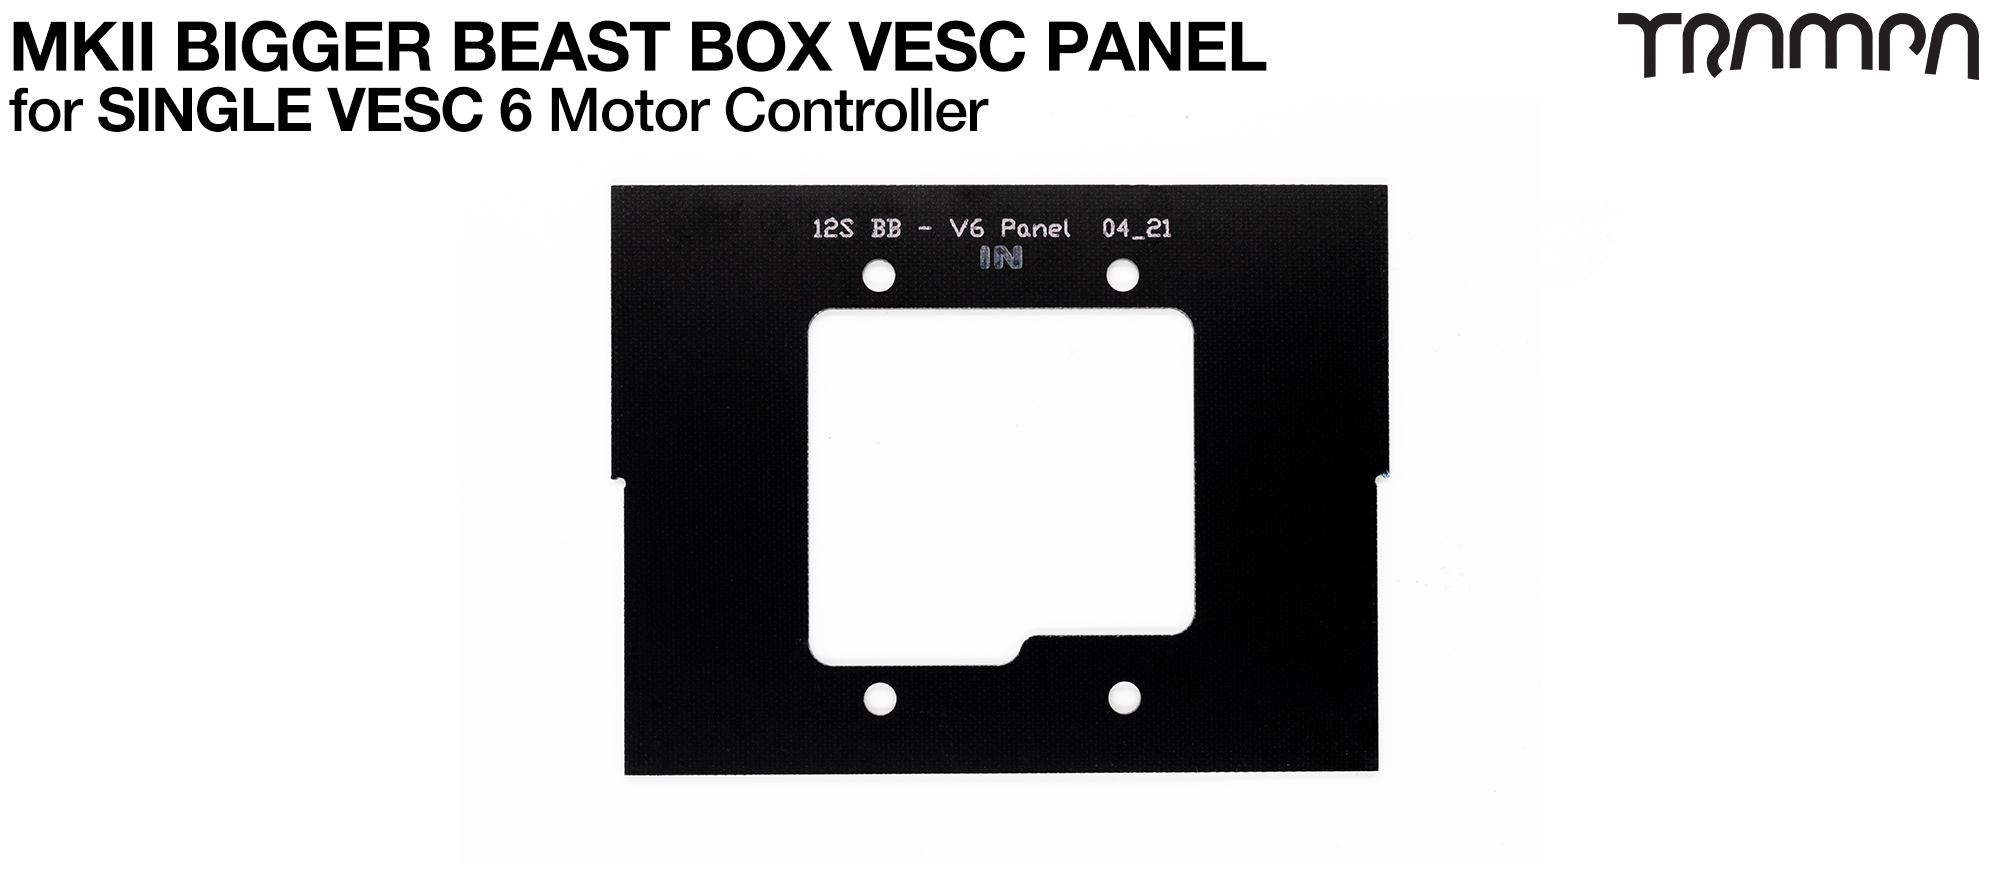 VESC 6 Mounting Panel for MkII BIGGER BEAST Box - SINGLE MOTOR